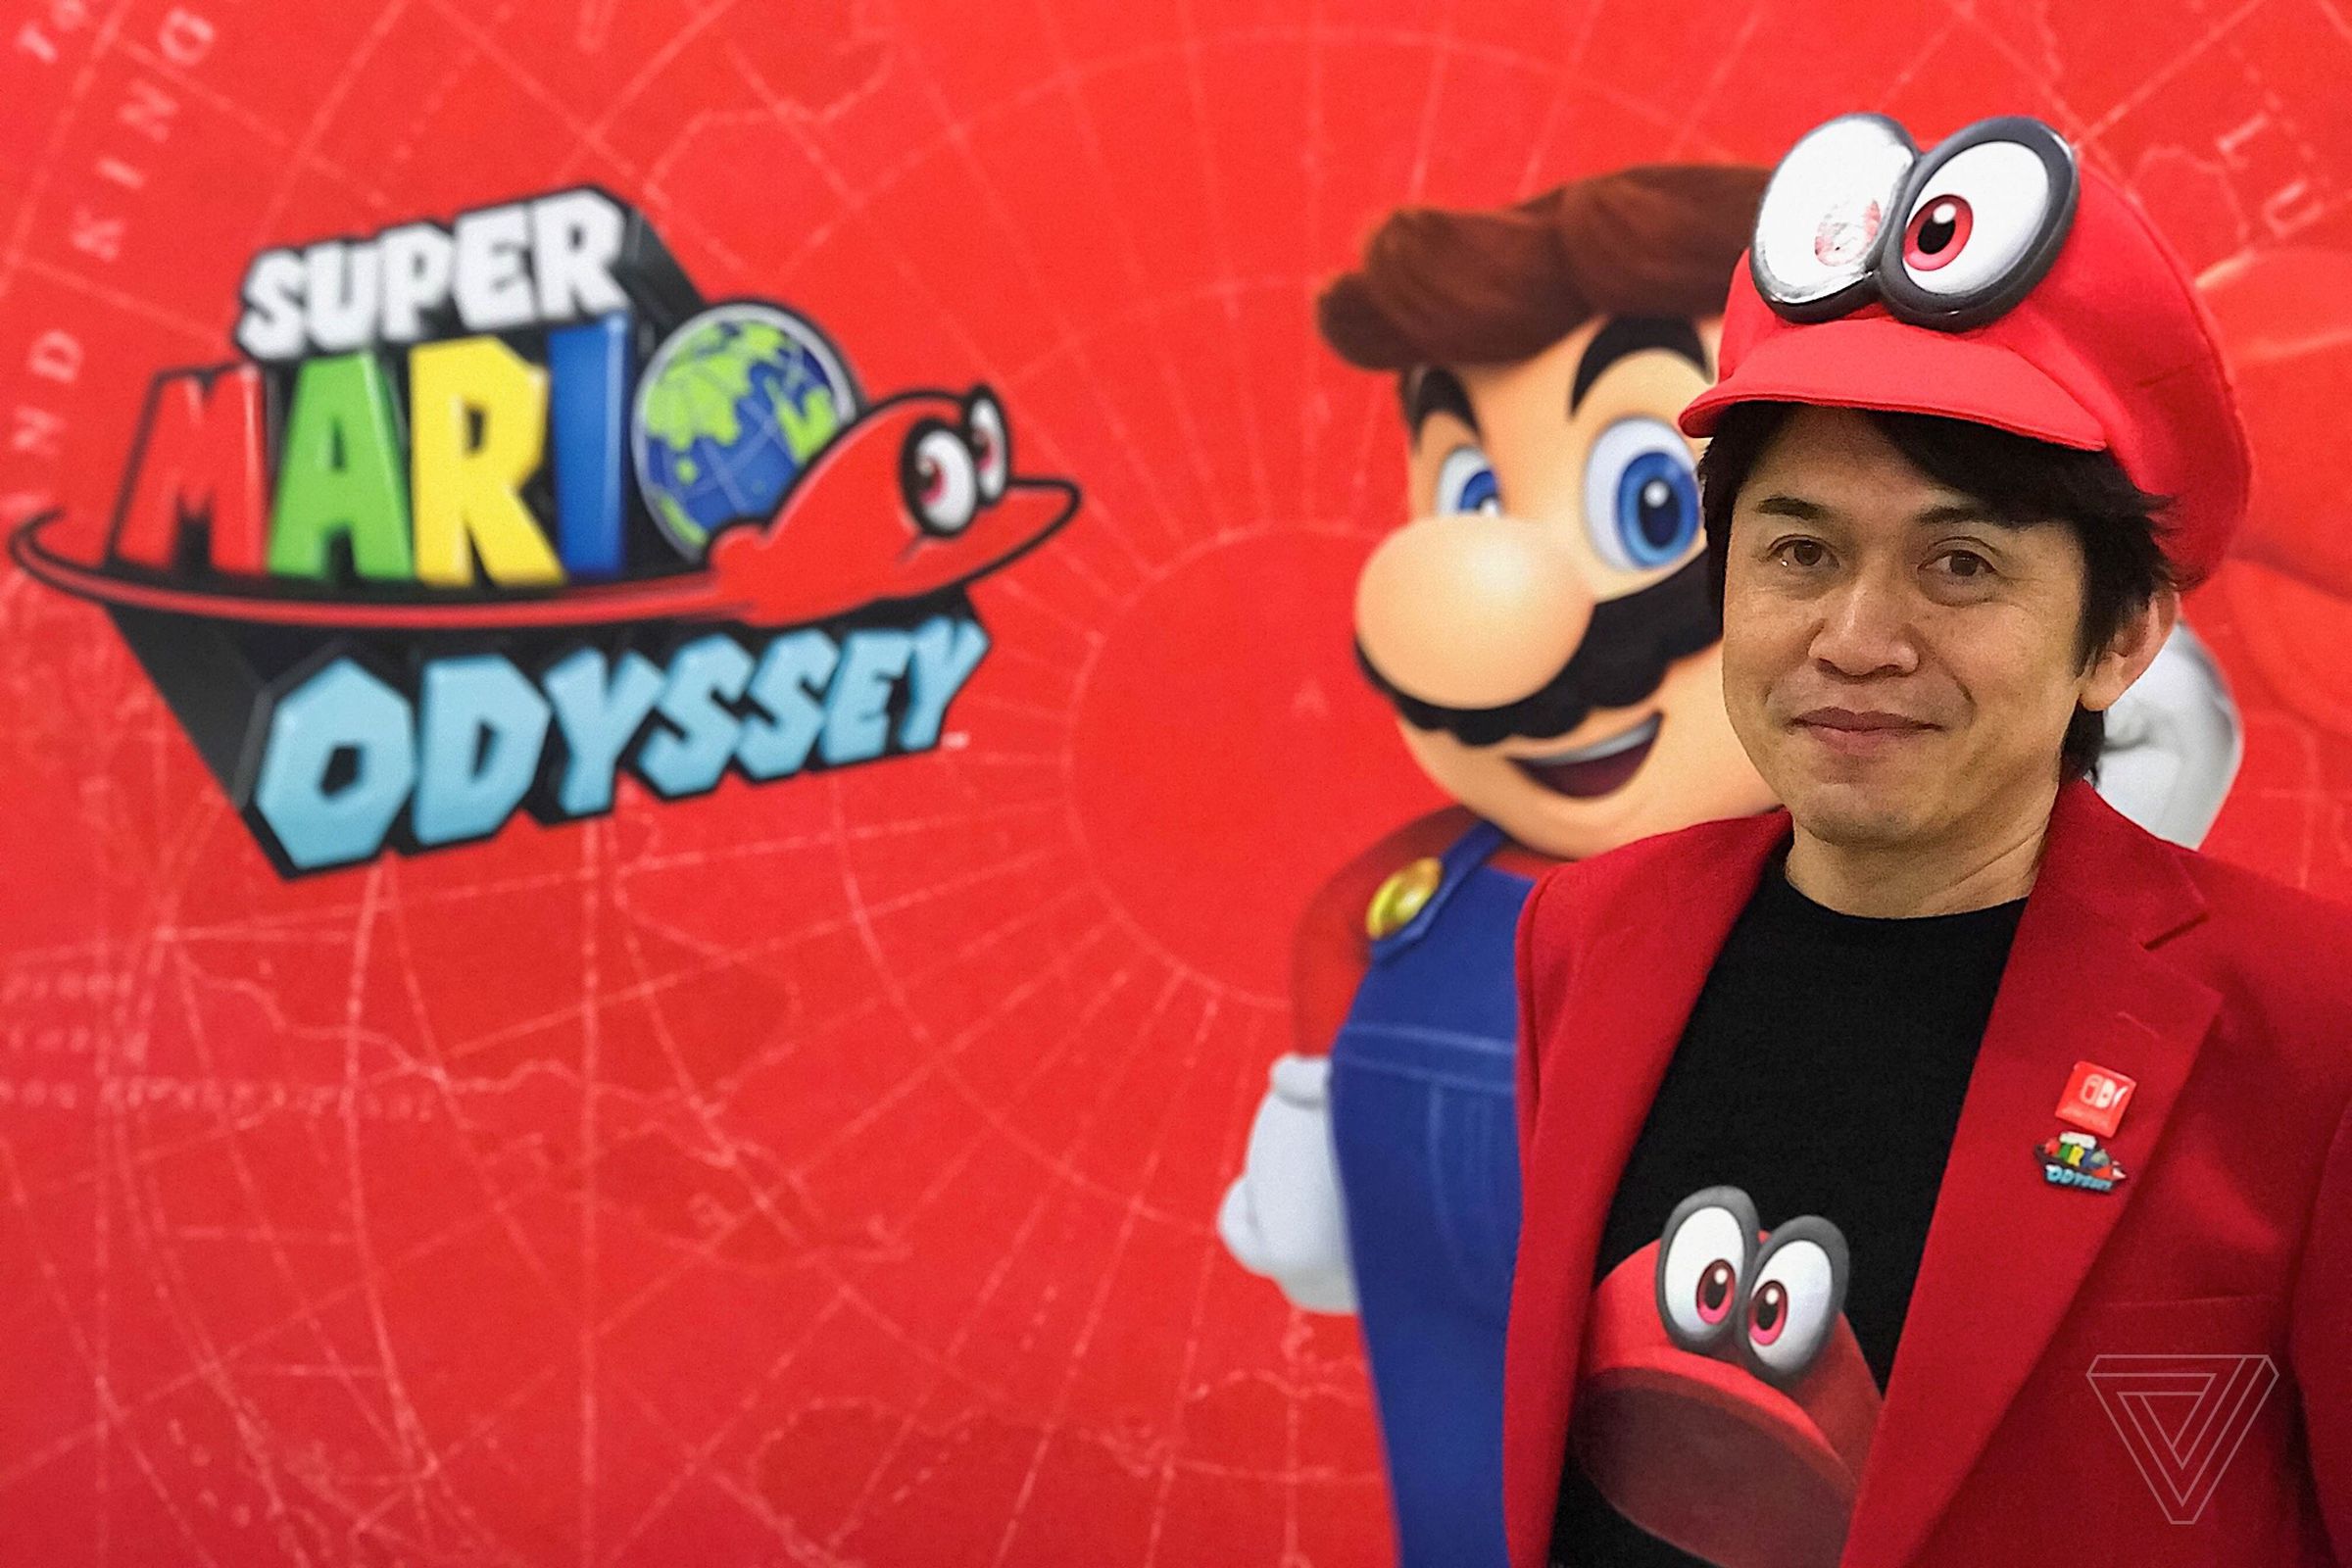 Super Mario Odyssey producer Yoshiaki Koizumi